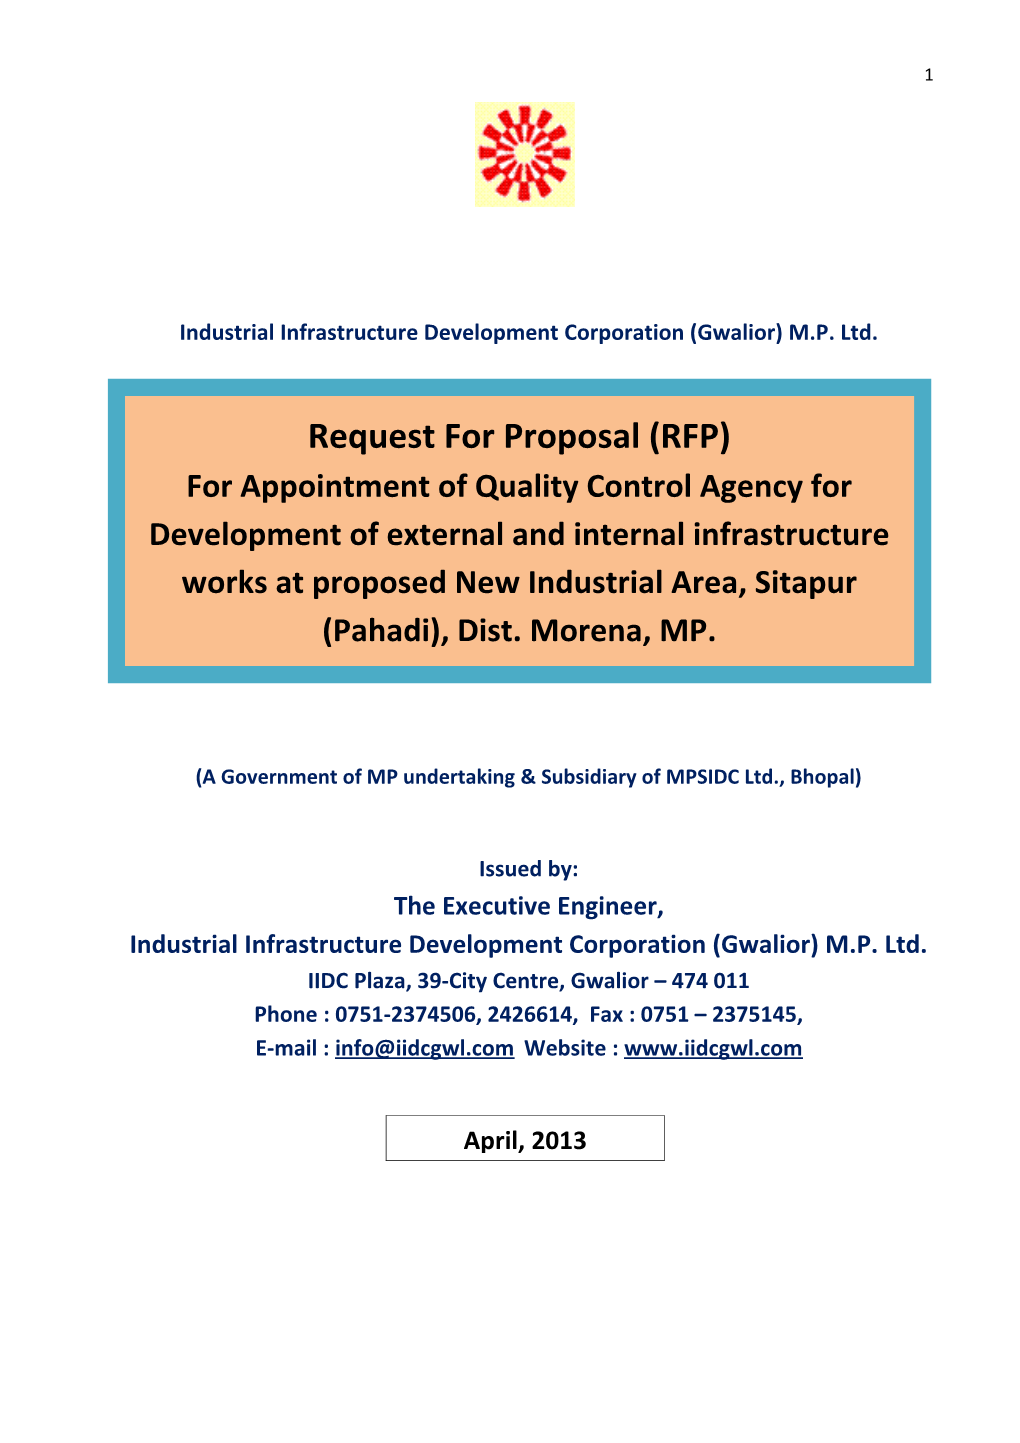 Industrial Infrastructure Development Corporation (Gwalior) M.P. Ltd